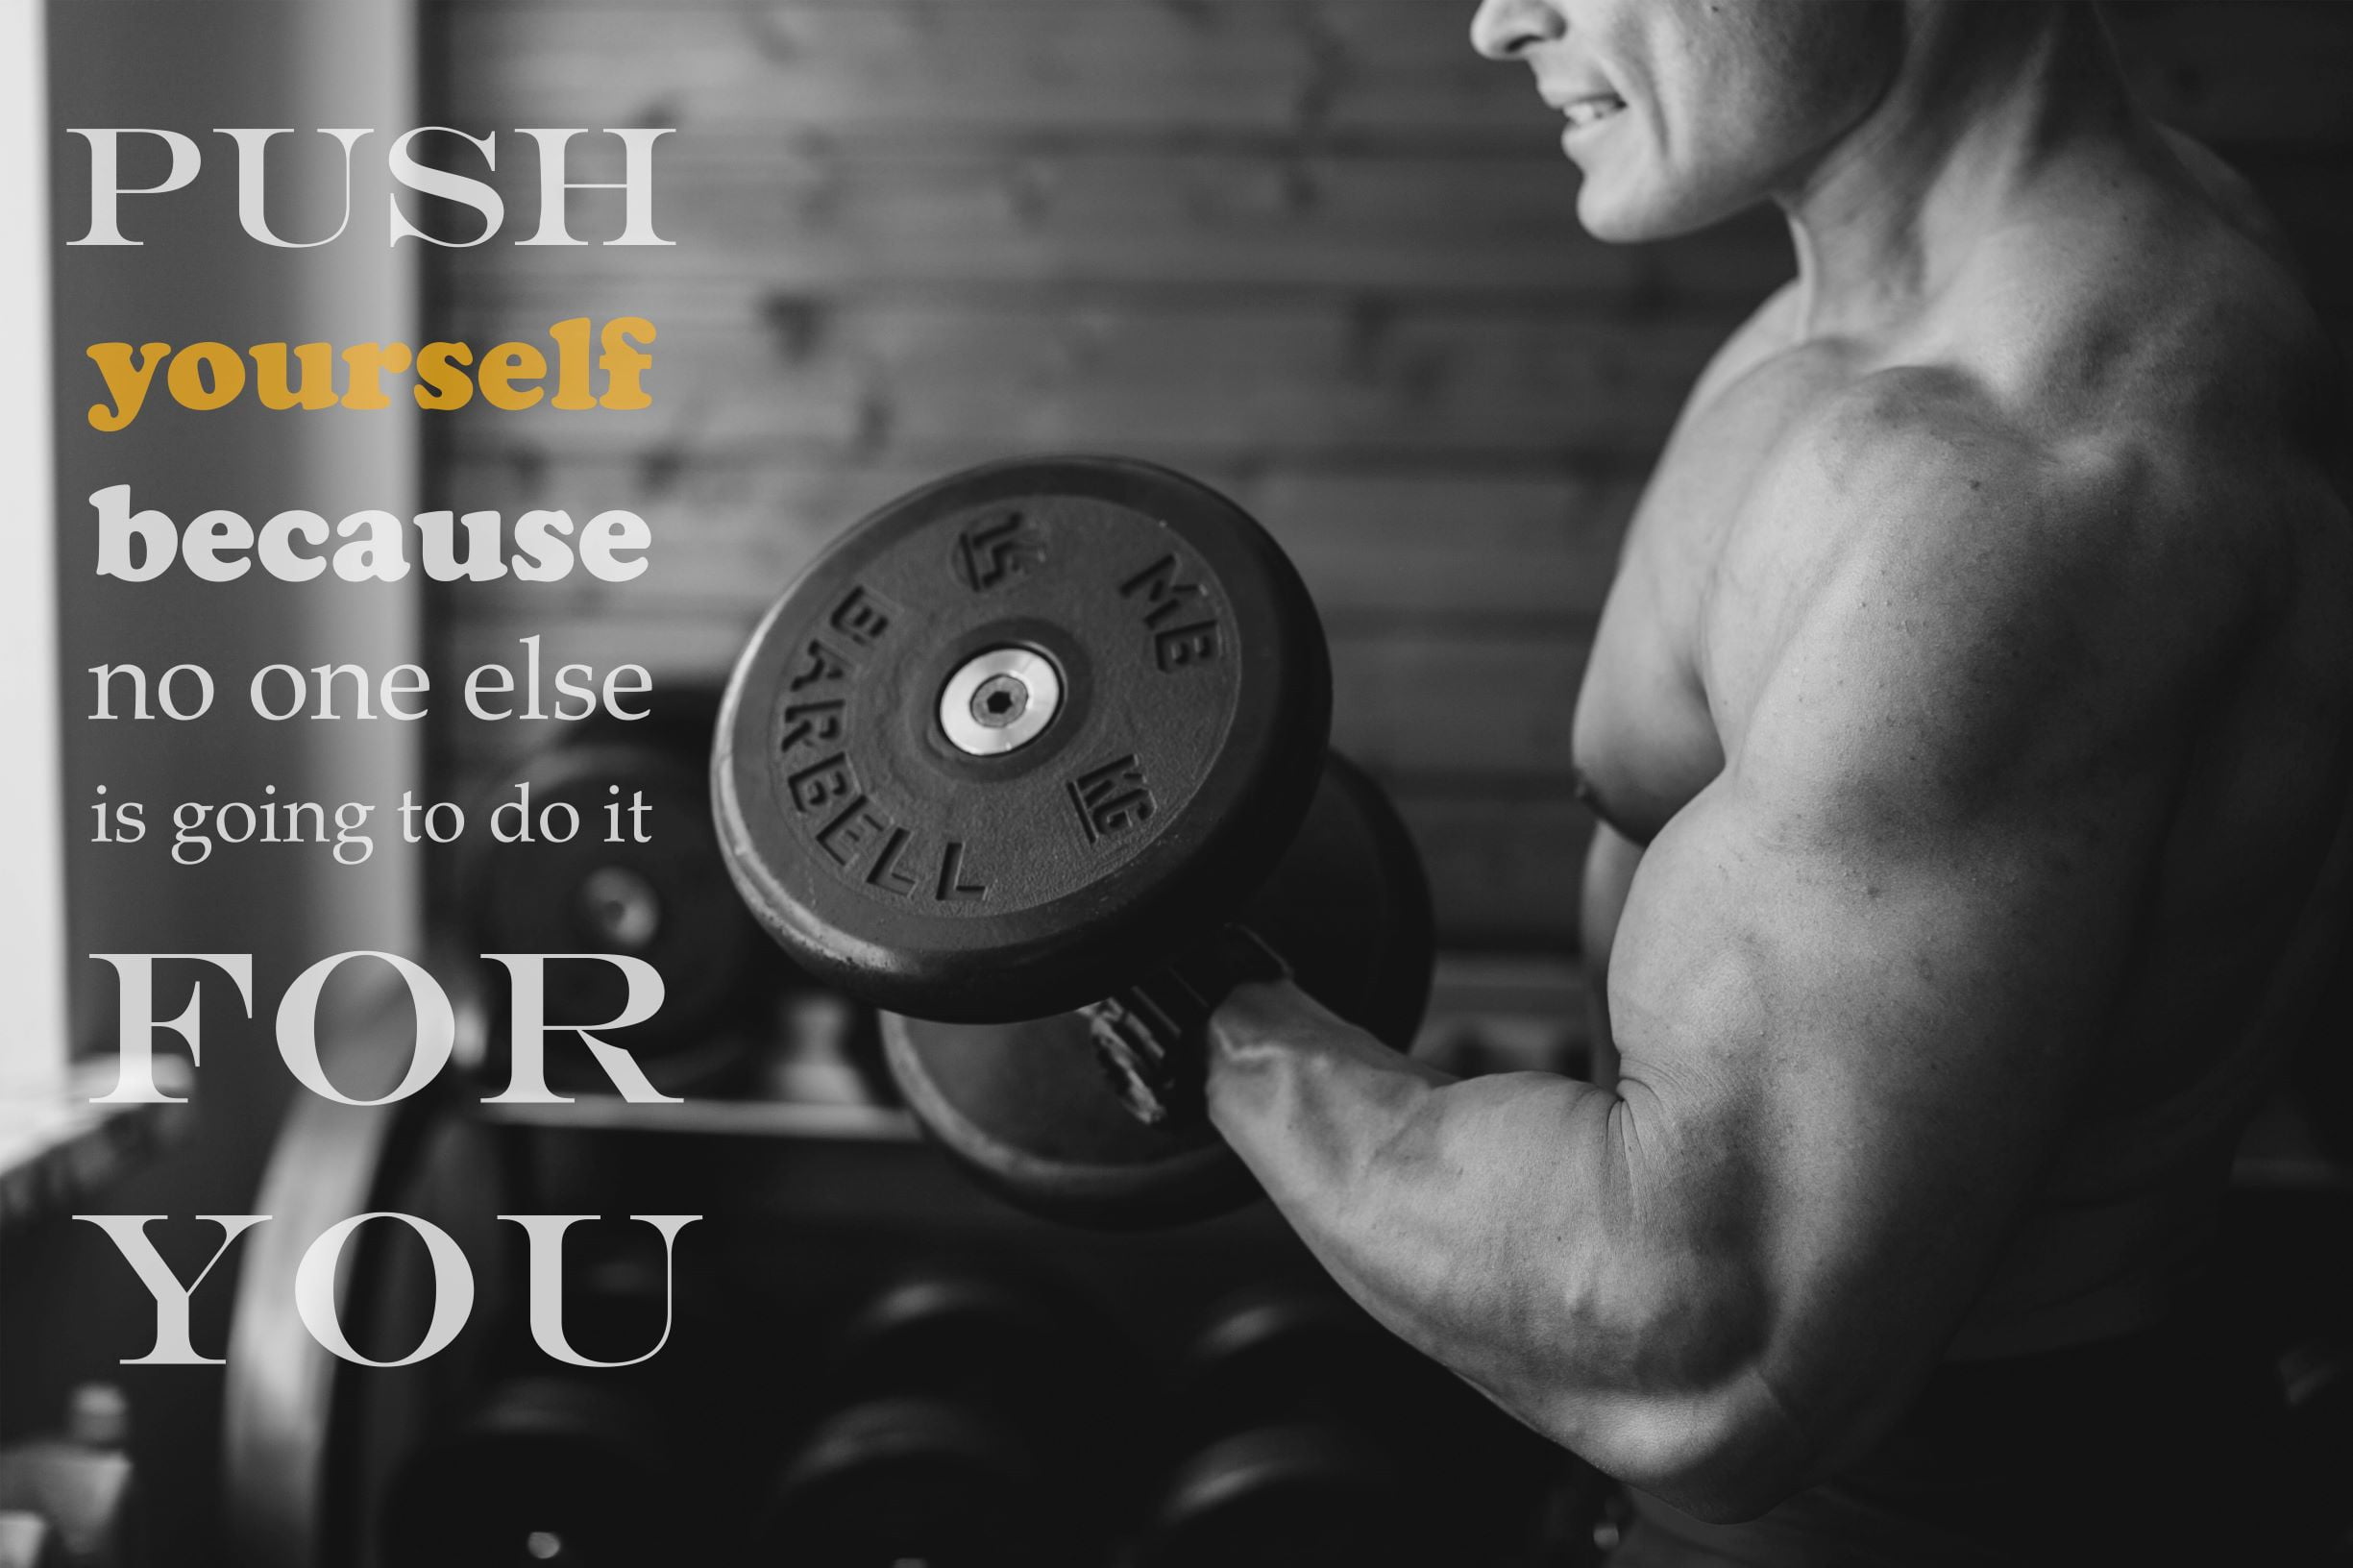 Zufriedenheitsgarantie Gym Fitness Motivation Workout Quote Positive Poster Picture Print Wall